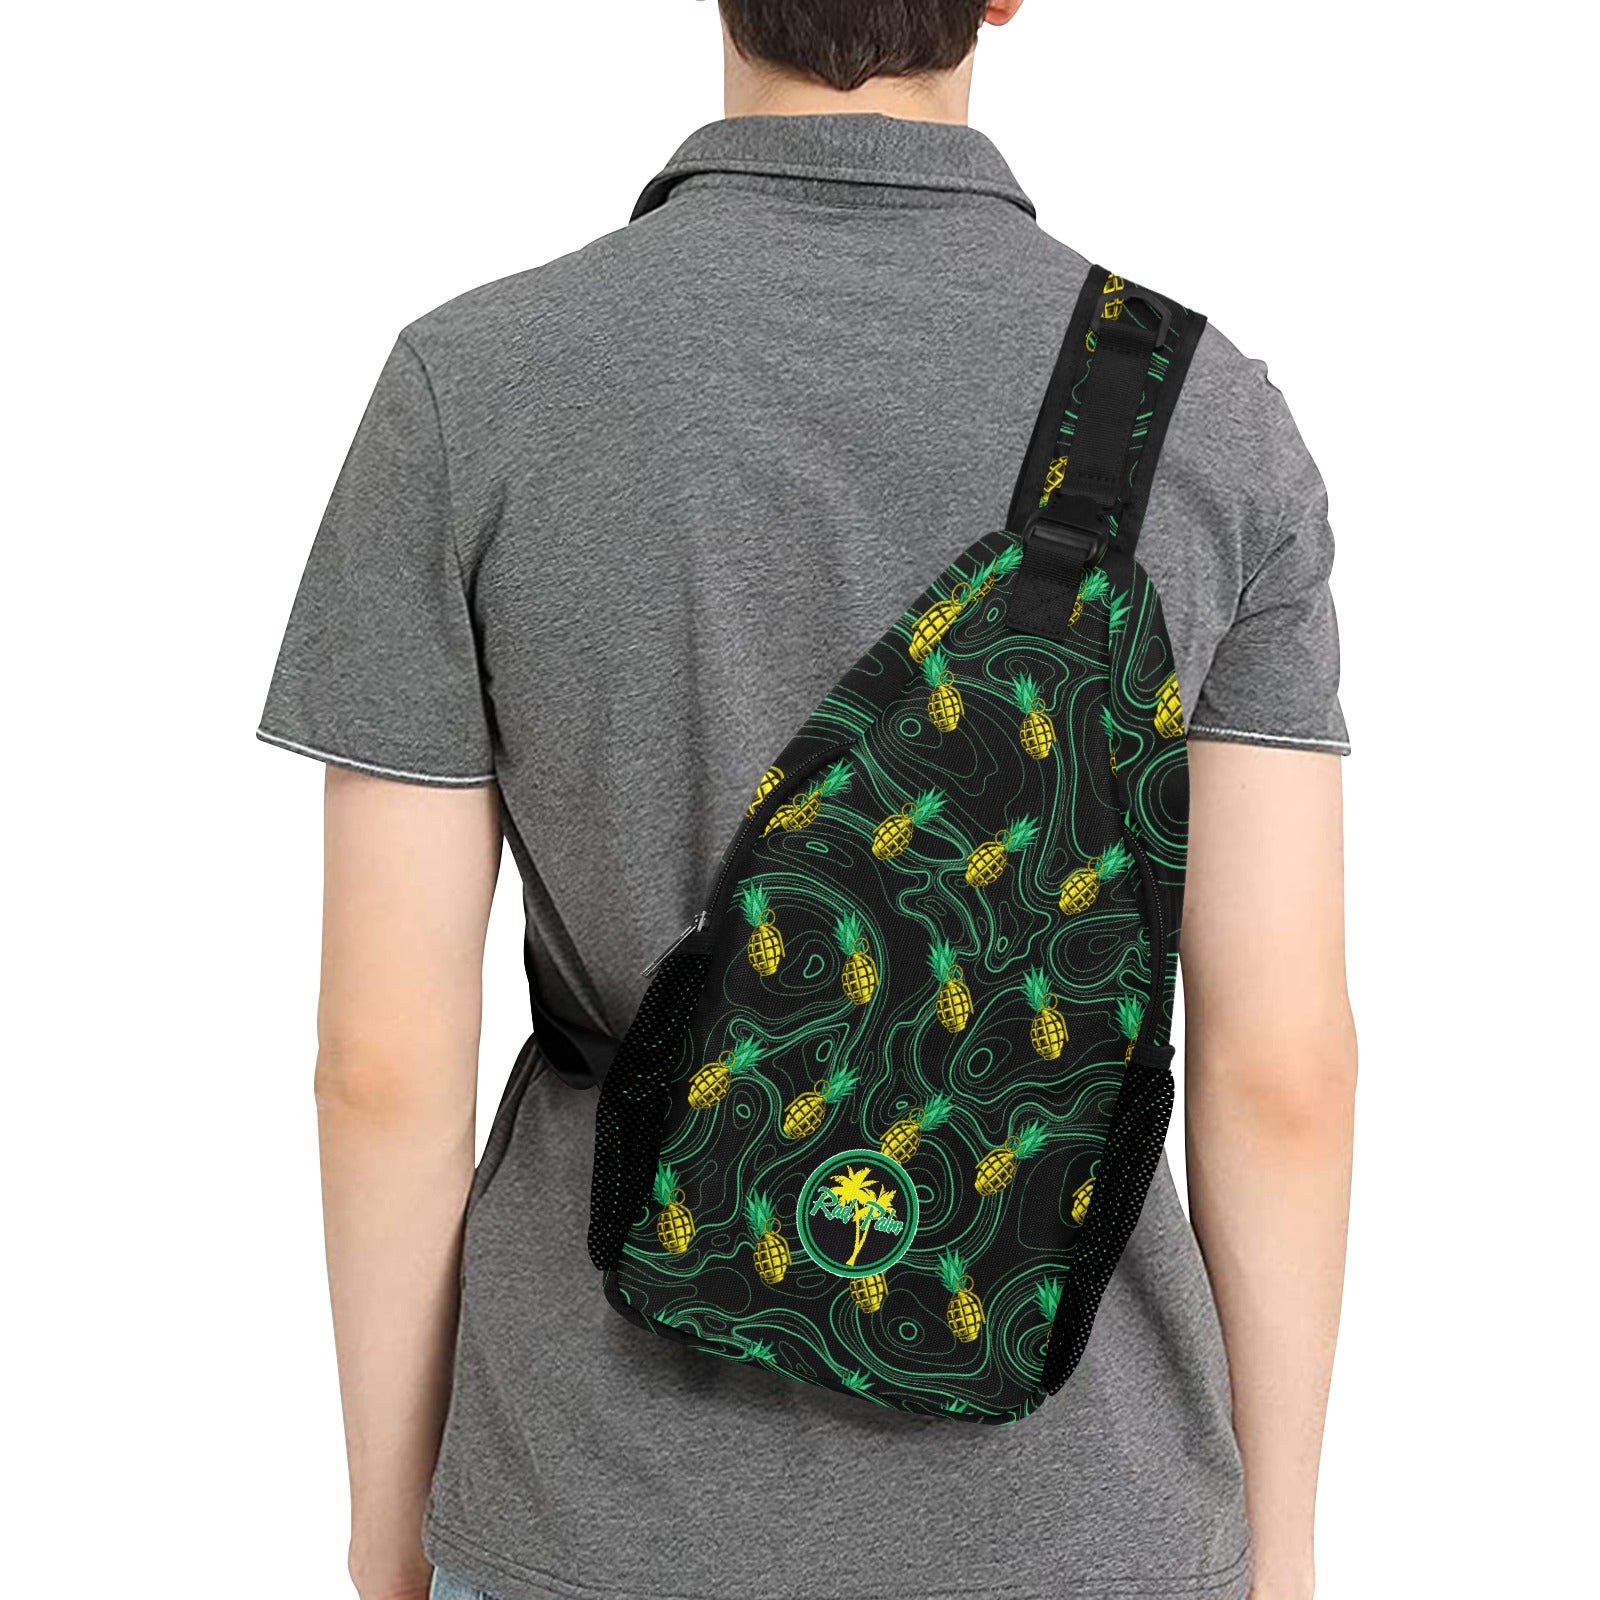 Pineapple Death Chest Bag